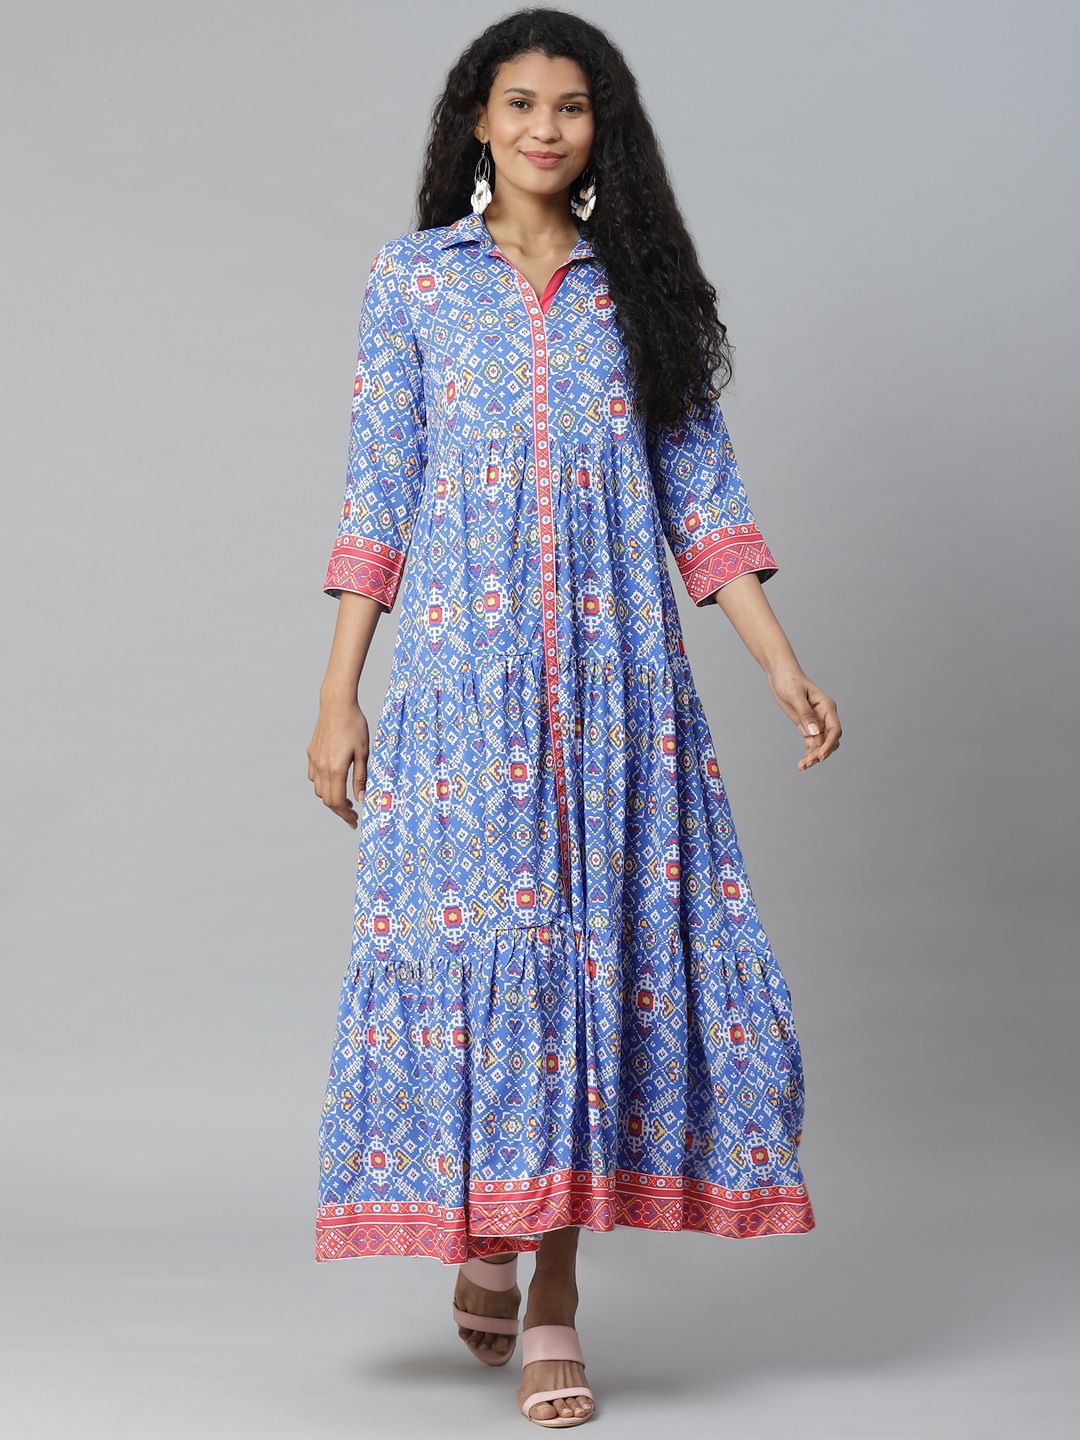 Rangriti Women Blue & Pink Tiered Printed Maxi Dress Price in India